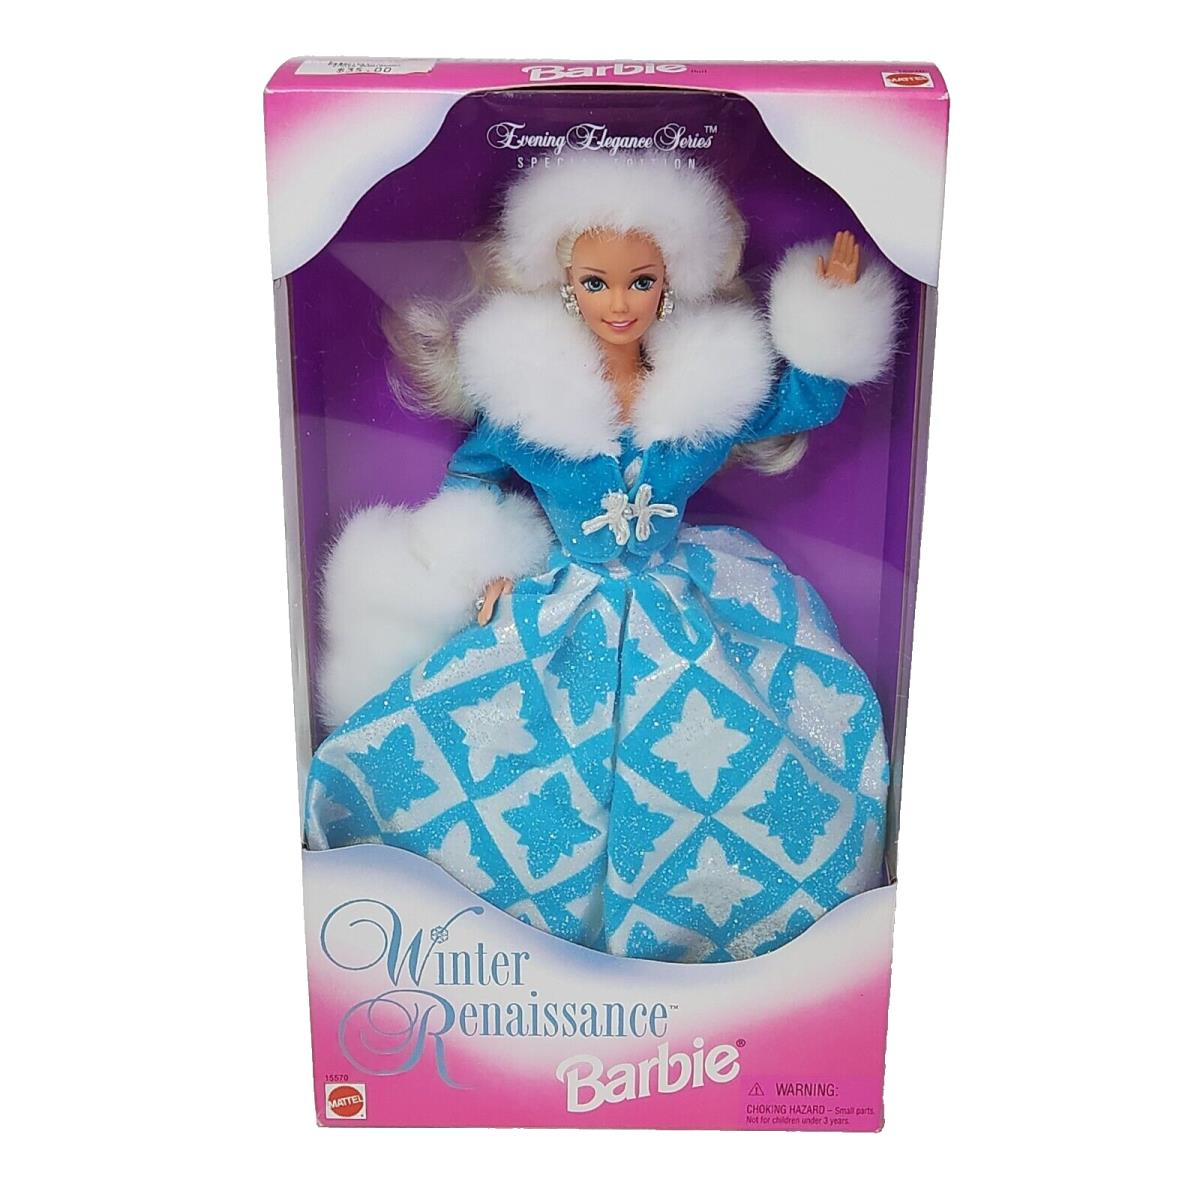 Vintage 1996 Winter Renaissance Barbie Doll IN Box 15570 Mattel